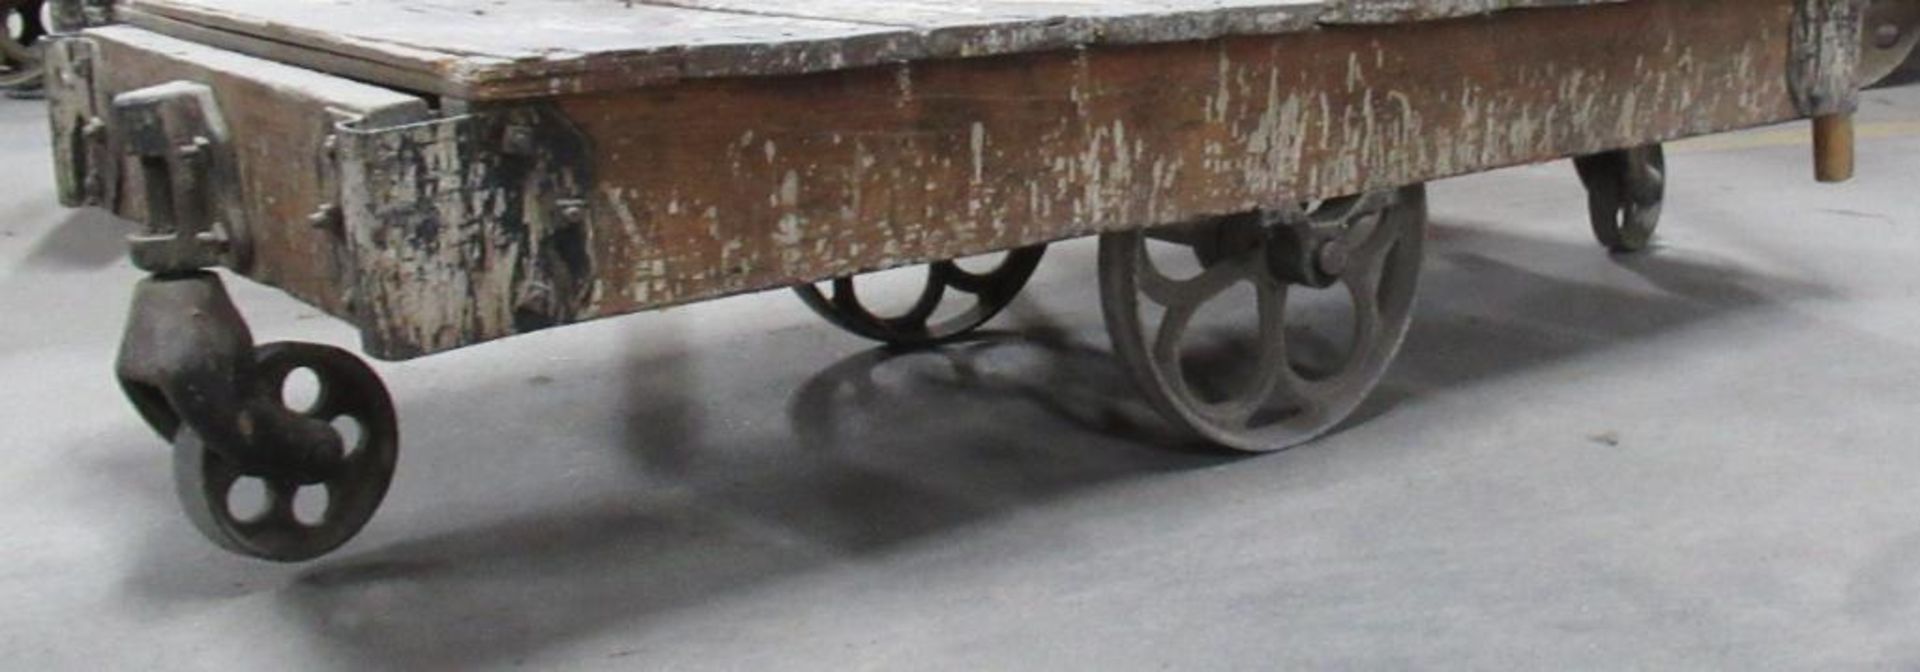 Vintage Steel Wheel Zero Turn Cart w/Gross Stabil Deep Throat Bar Clamps - Image 3 of 3